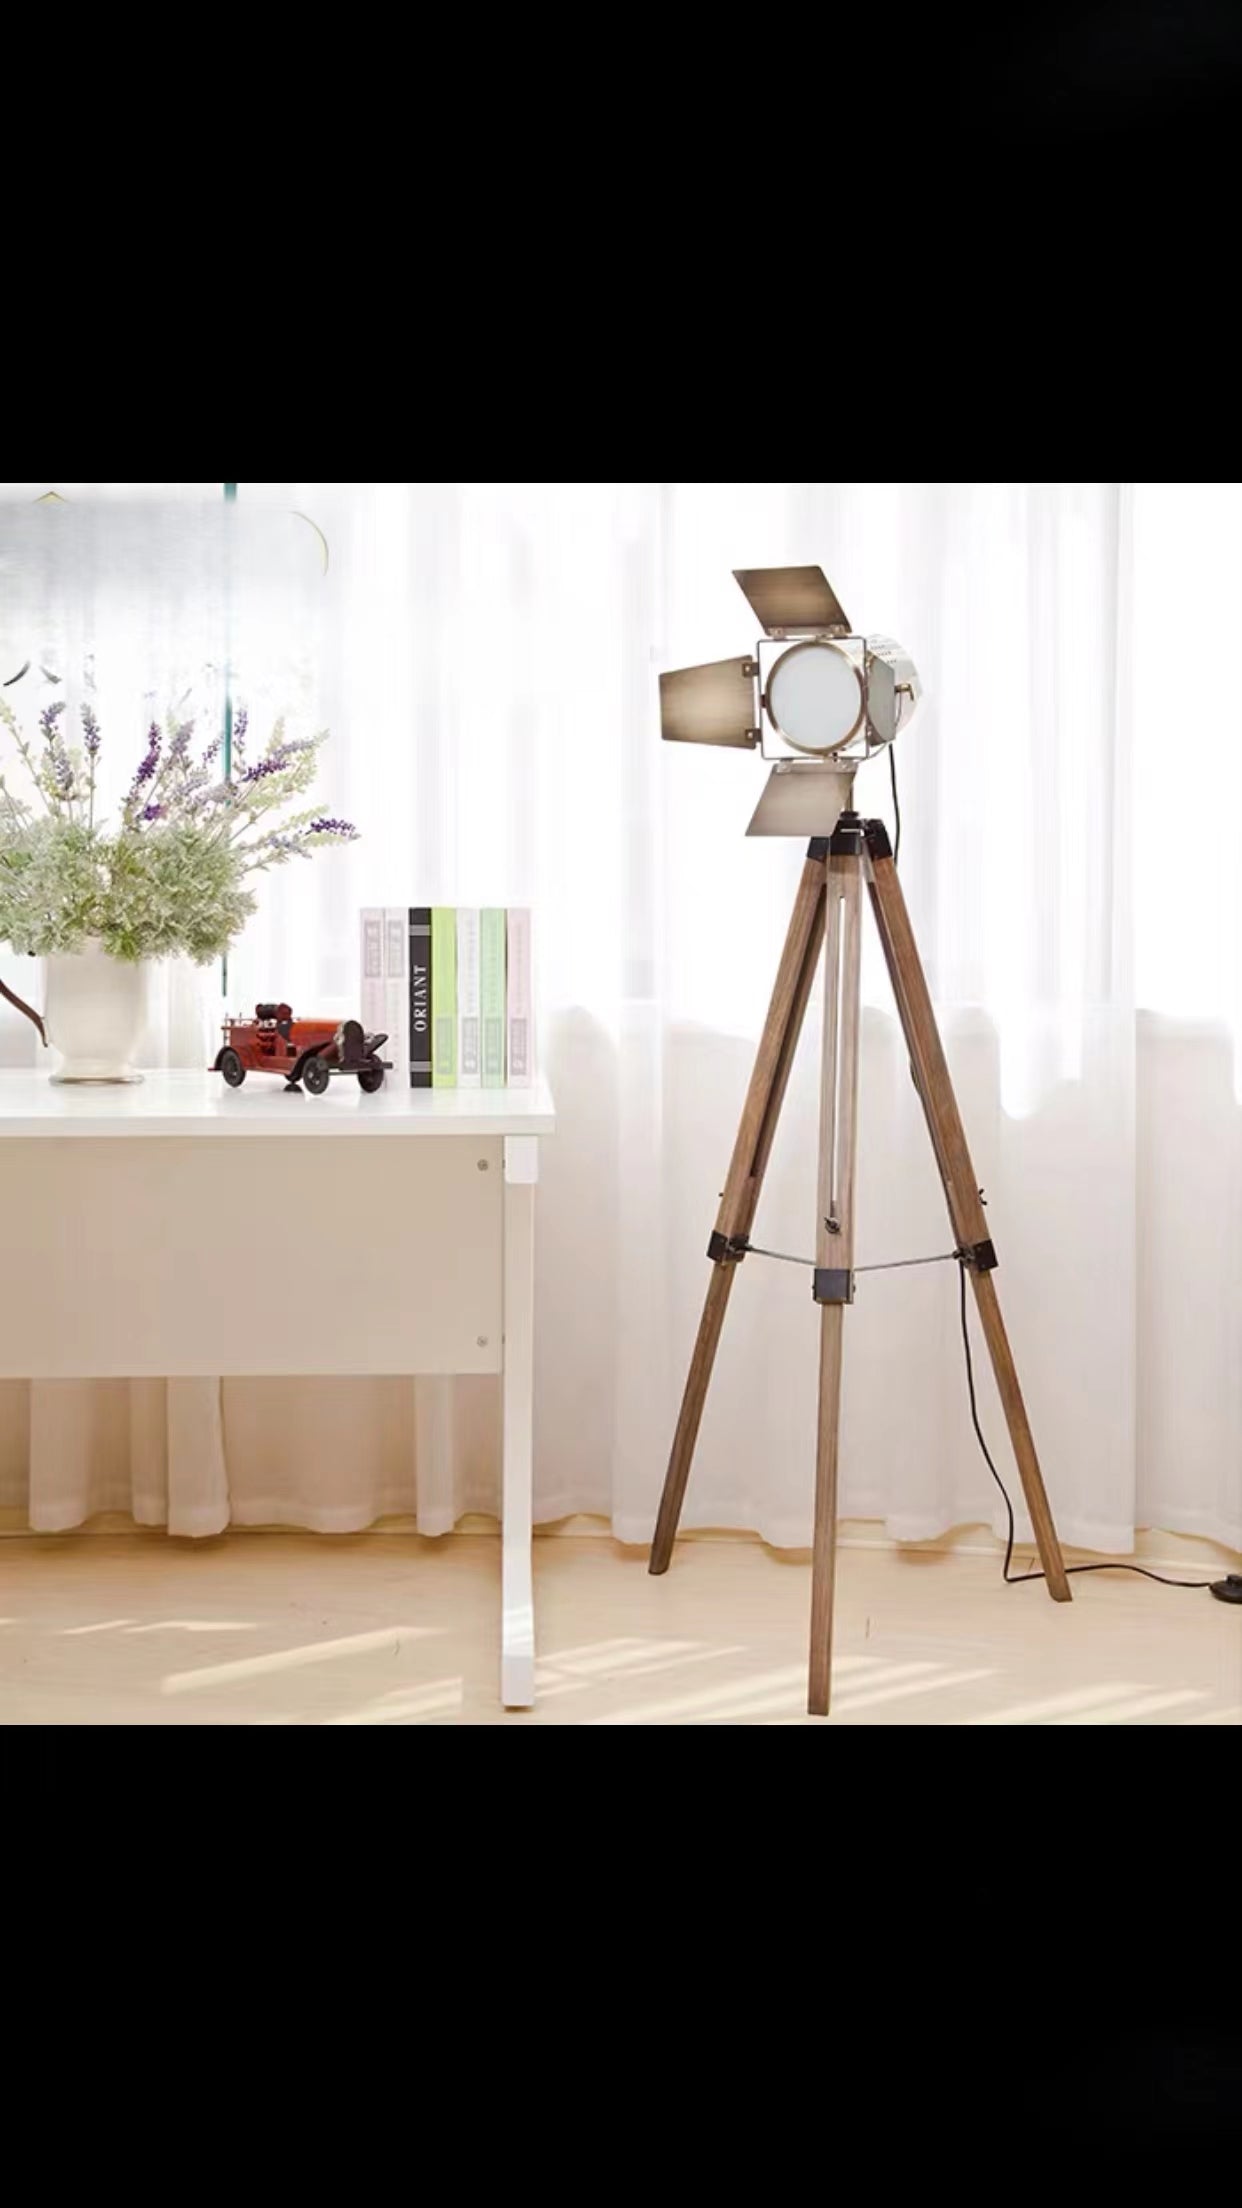 Fred Walnut Tripod Floor Lamp - 4 Seasons Home Gadgets